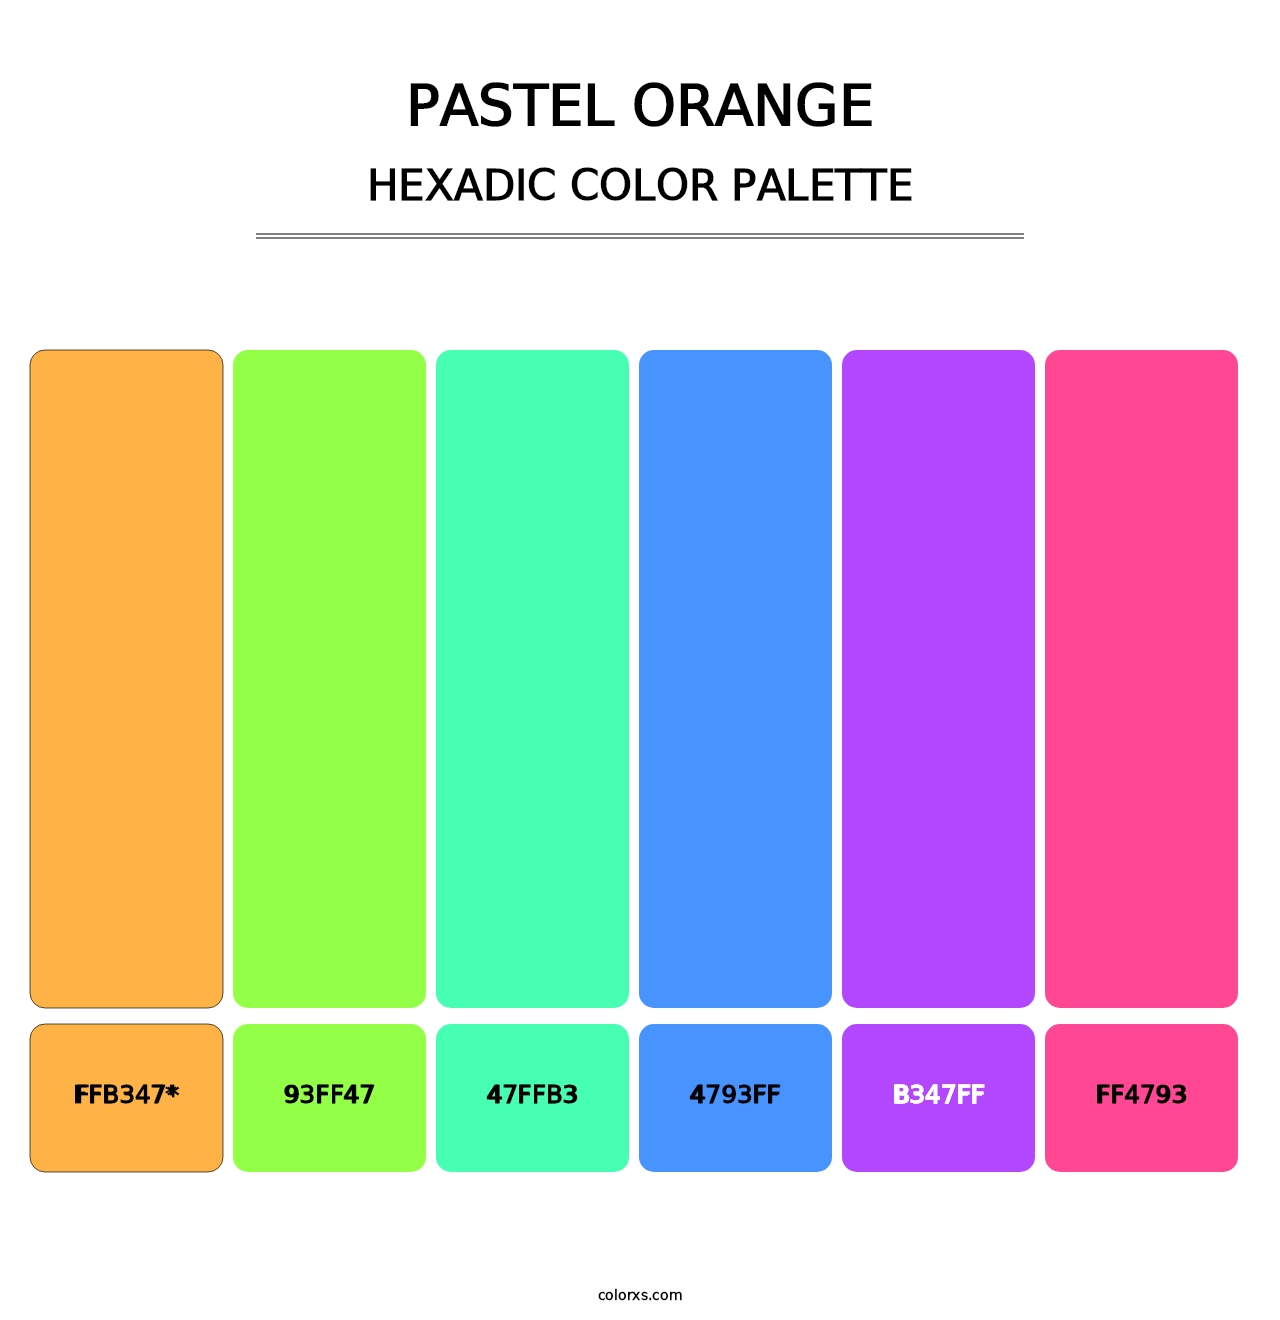 Pastel Orange - Hexadic Color Palette